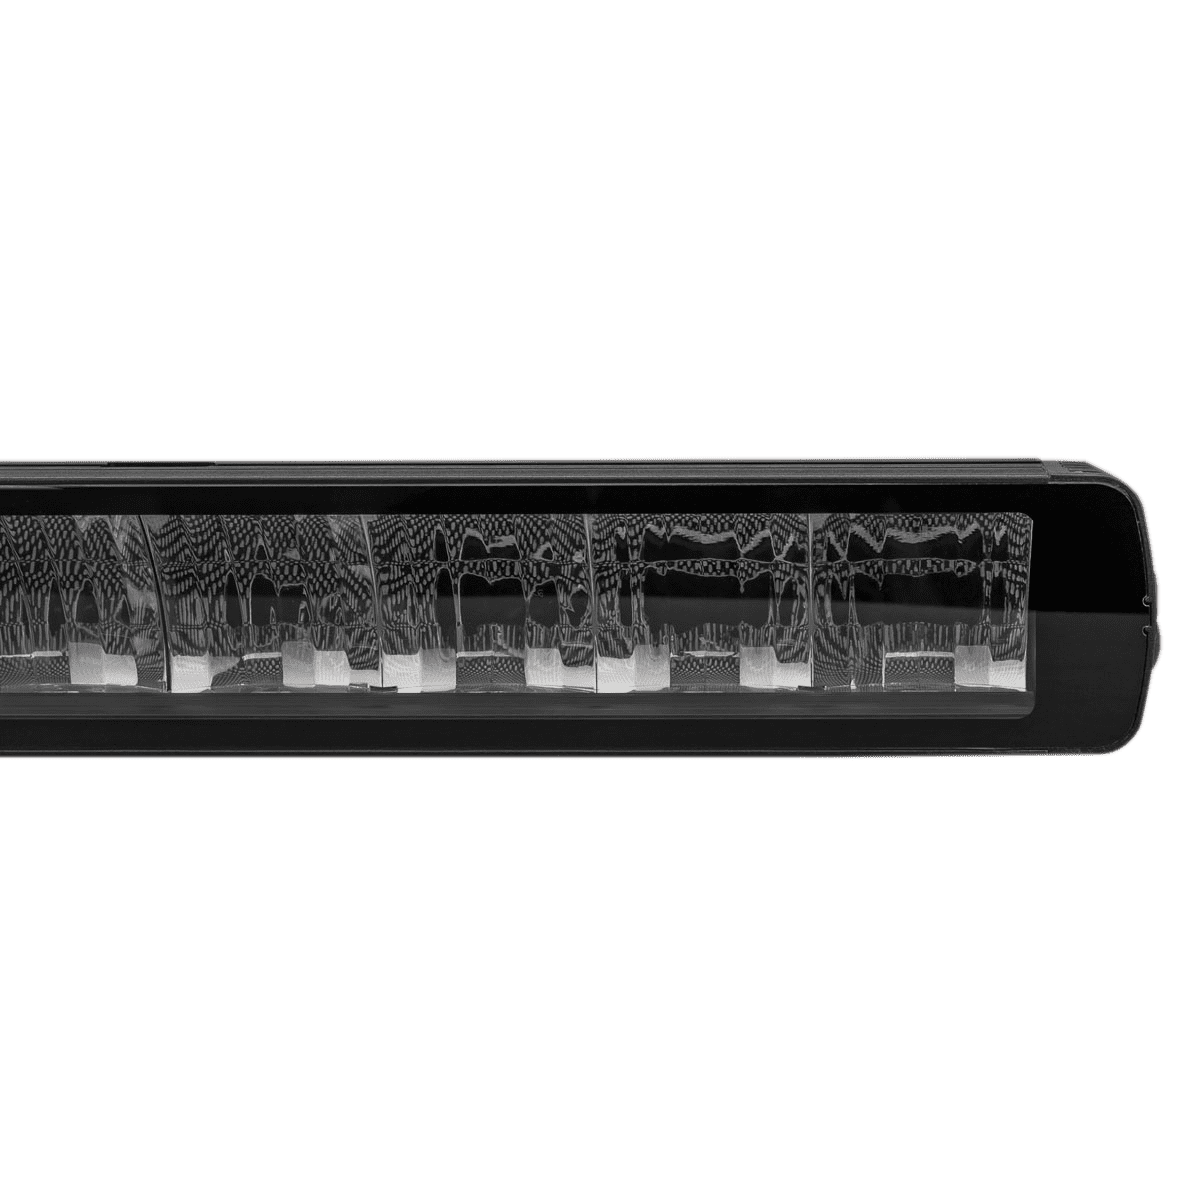 STEDI Light Bar ST-X 40.5 inches with E-mark